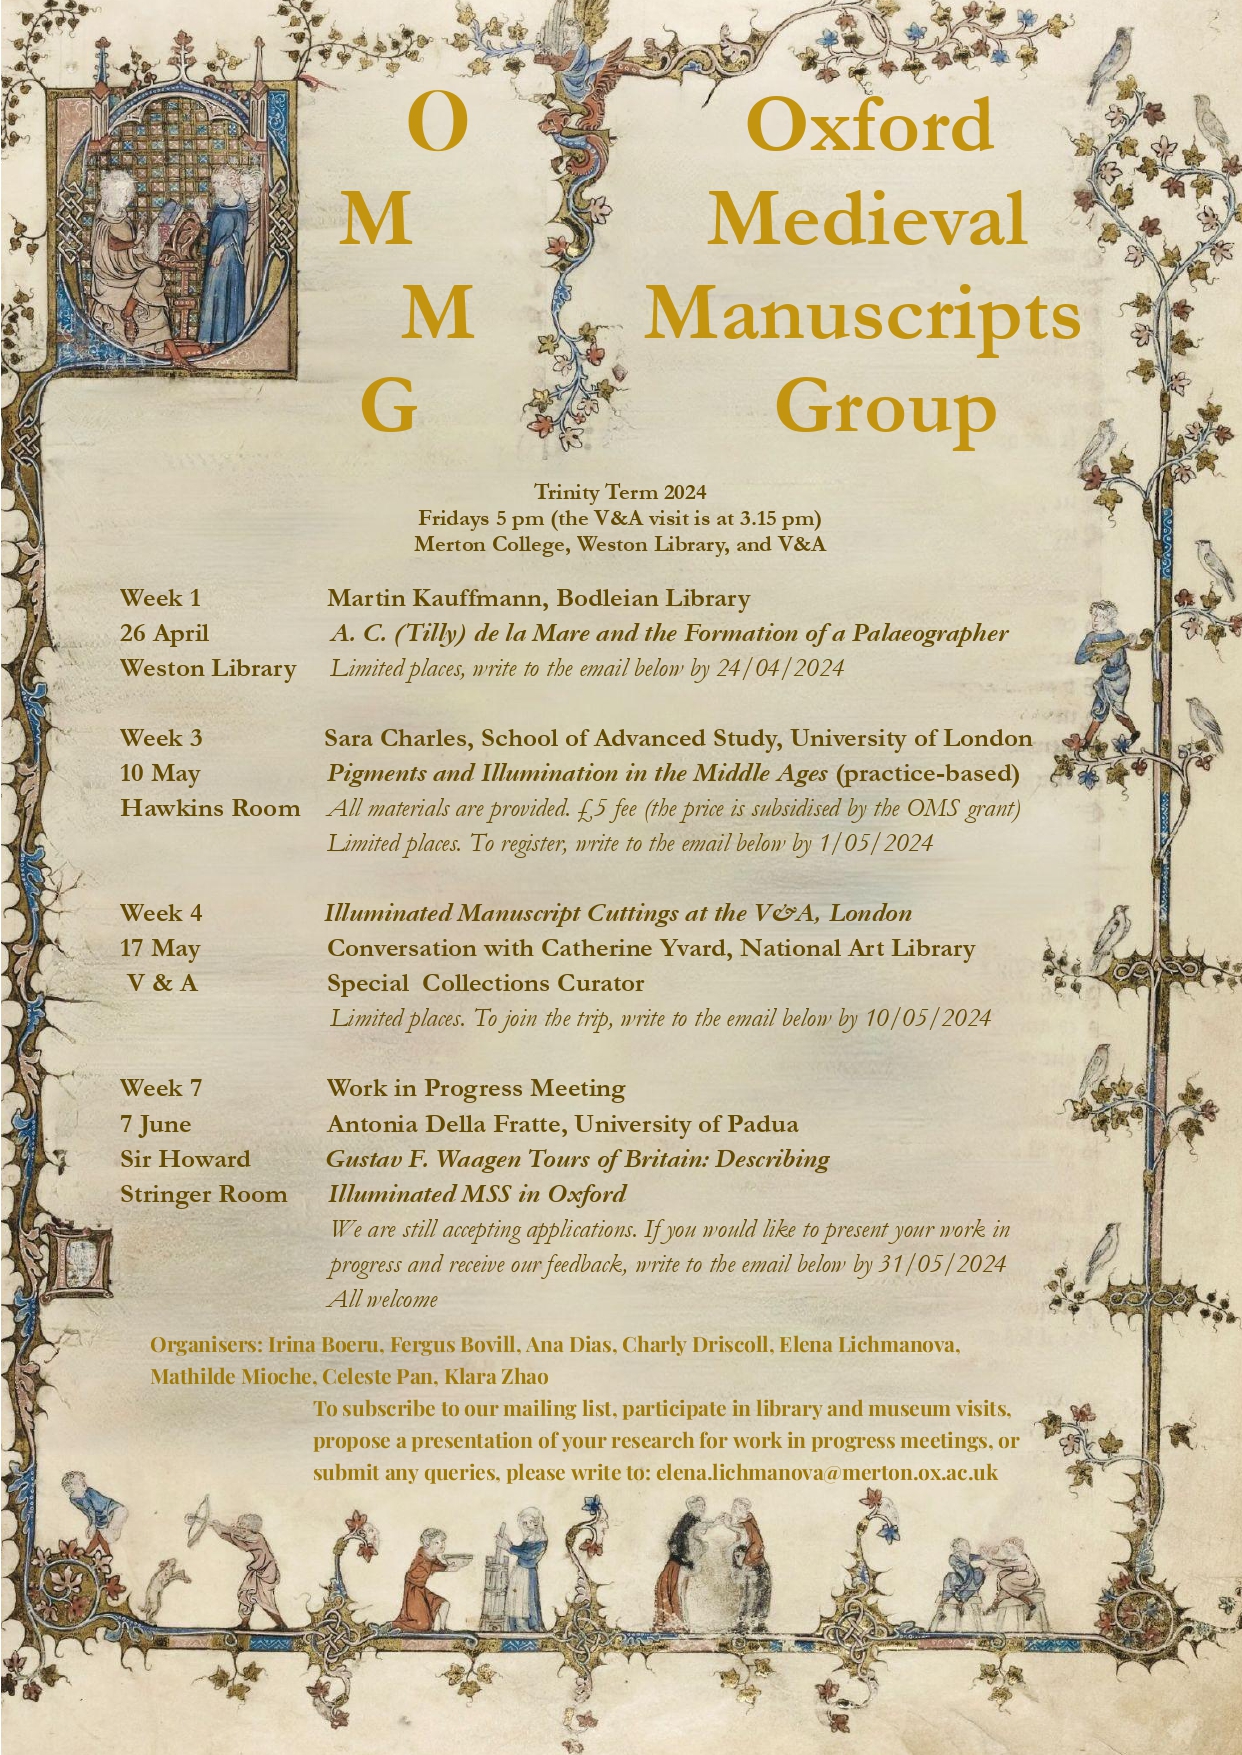 Oxford Medieval Manuscripts Group seminar